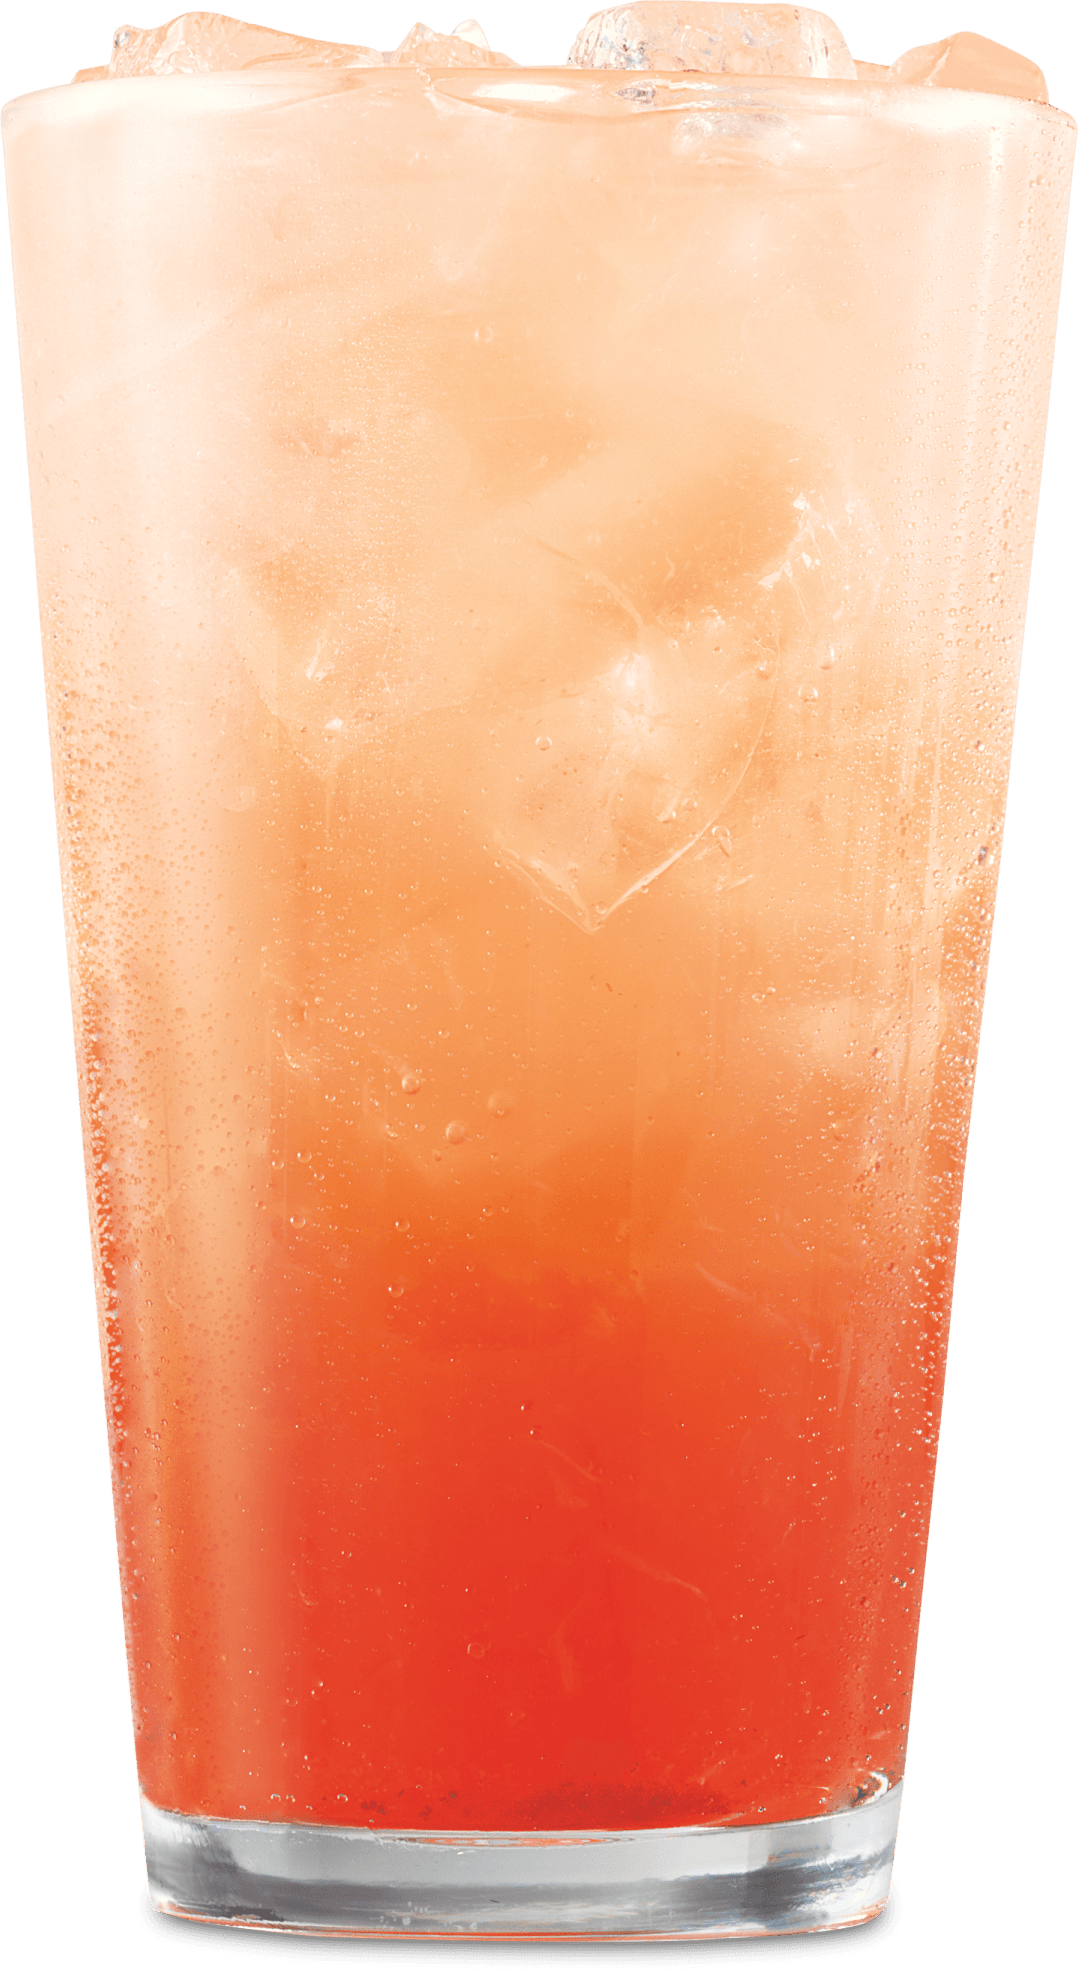 Arby's Medium Strawberry Lemonade Nutrition Facts